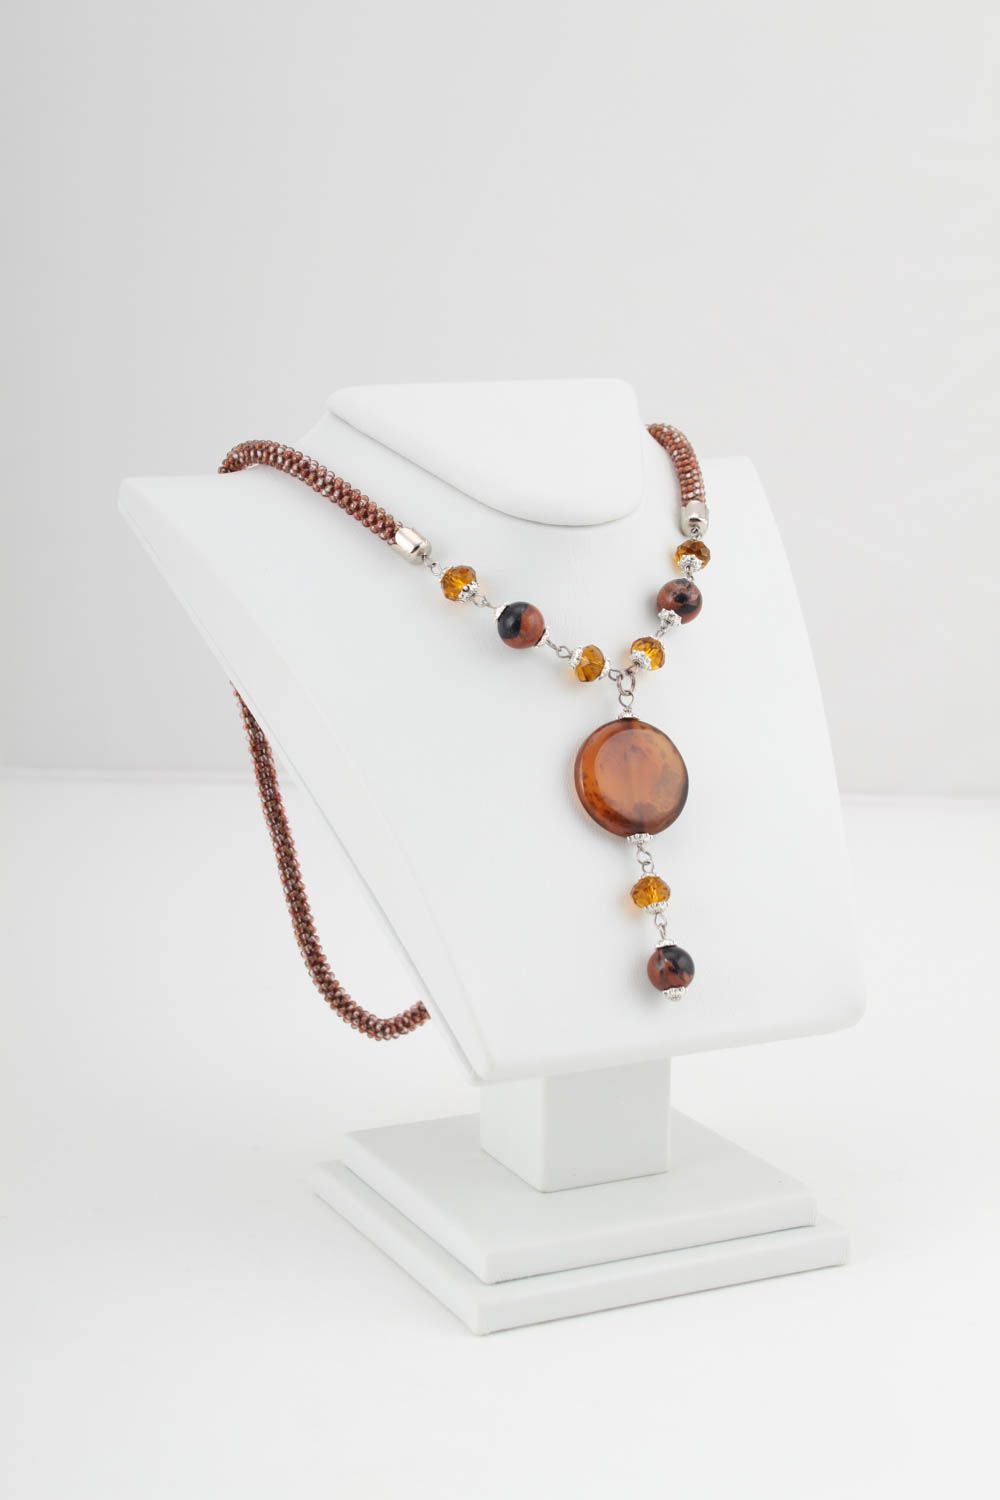 Stylish beaded necklace handmade pendant designer accessories fashion jewelry photo 1